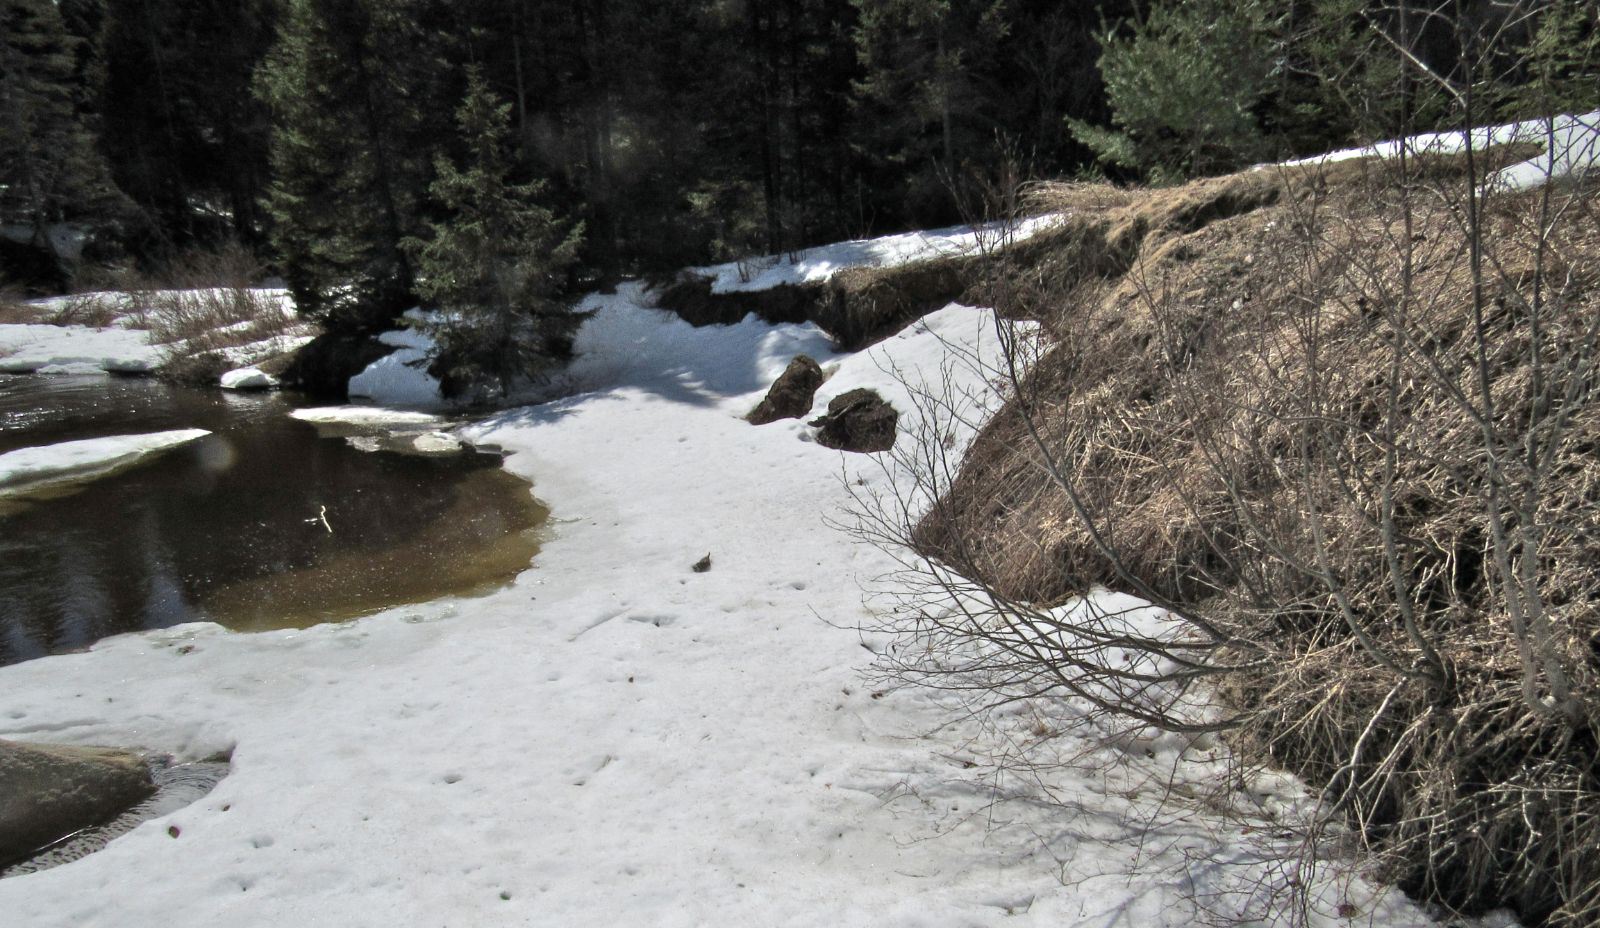 River bank erosion